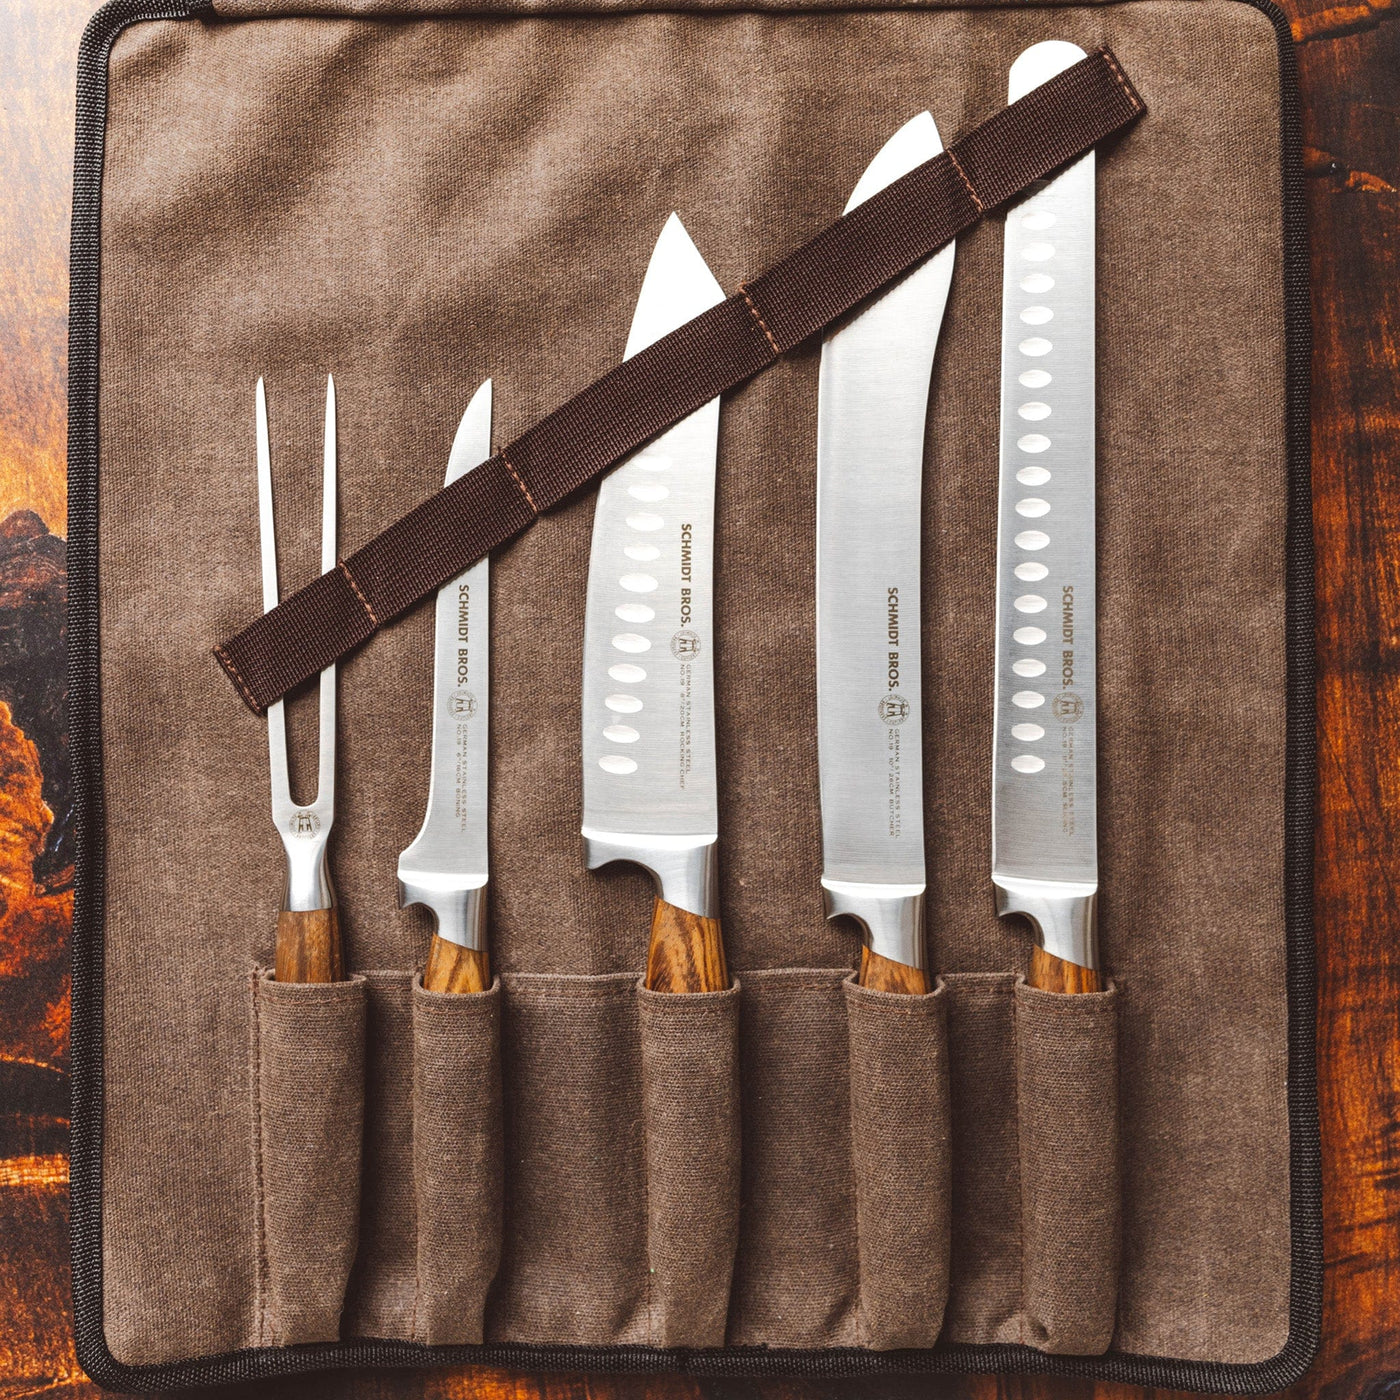 Modern Knife Set: 4 Piece High-performance Design Kitchen Knife